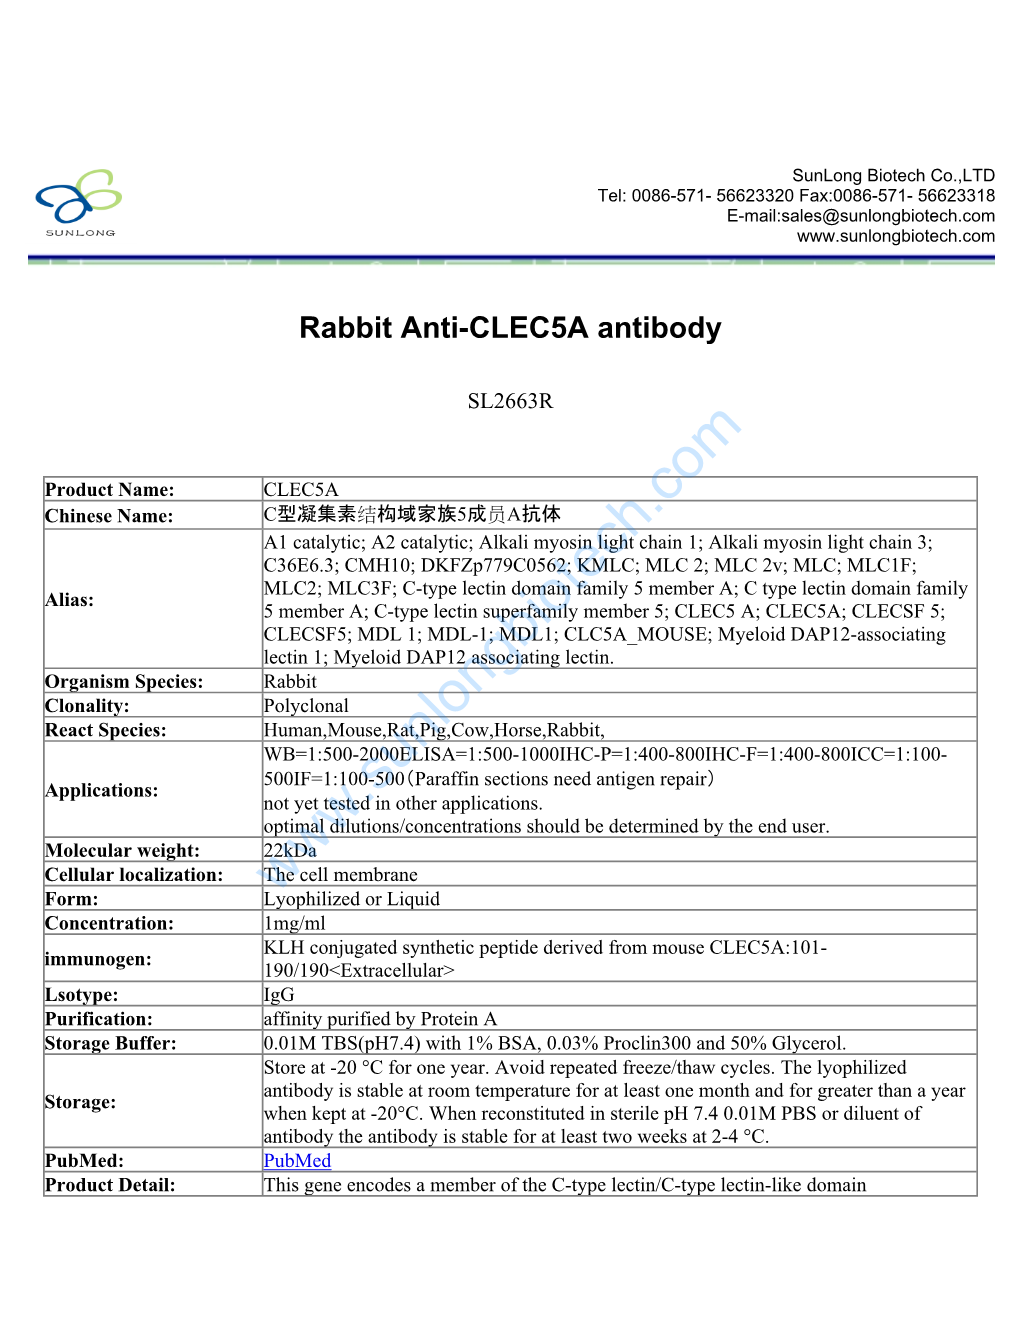 Rabbit Anti-CLEC5A Antibody-SL2663R